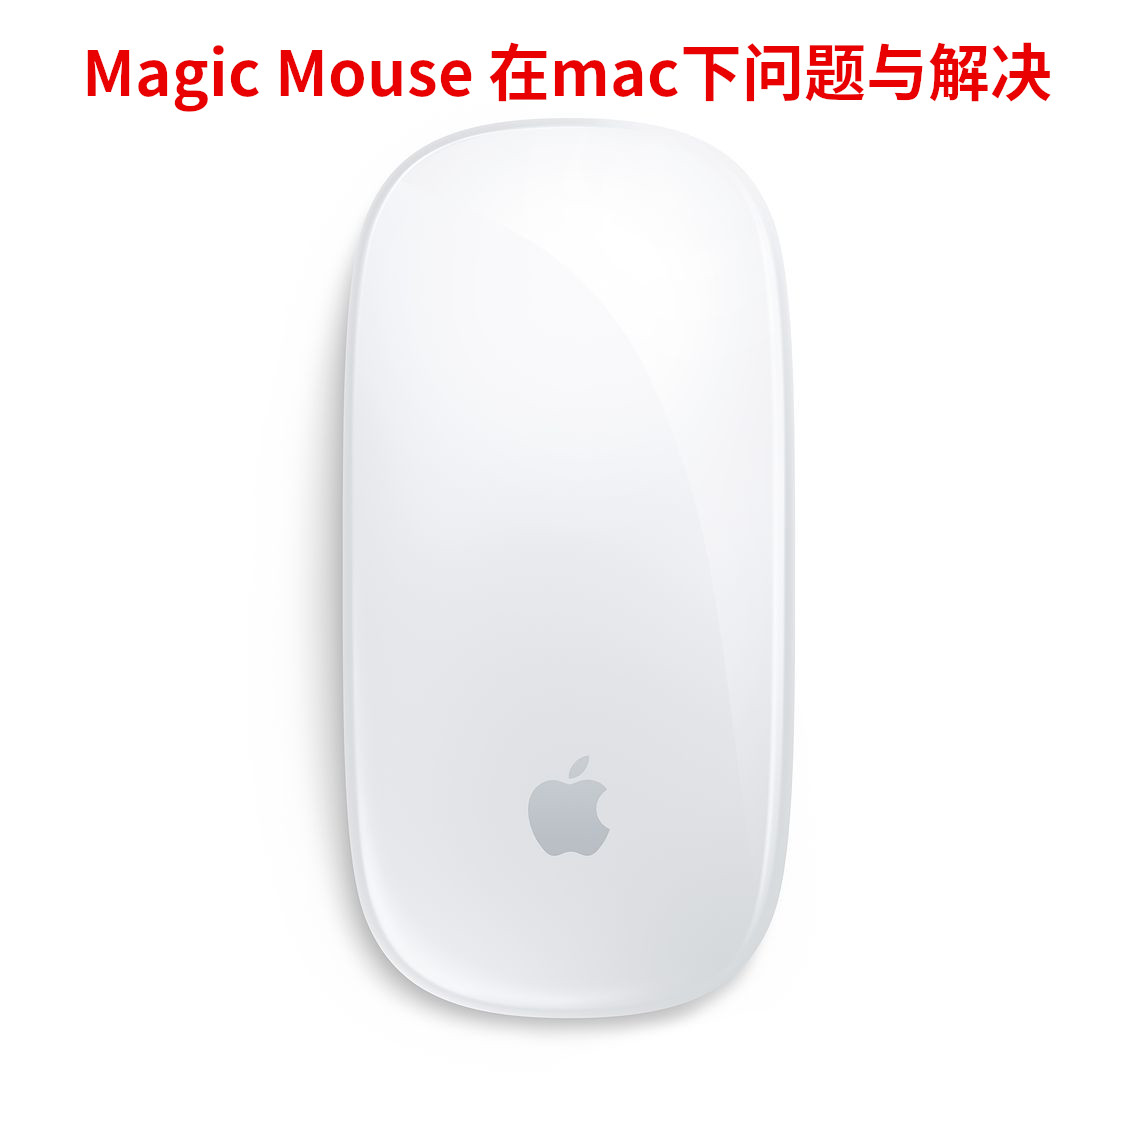 Magic Mouse（妙控鼠标）在mac下问题与解决